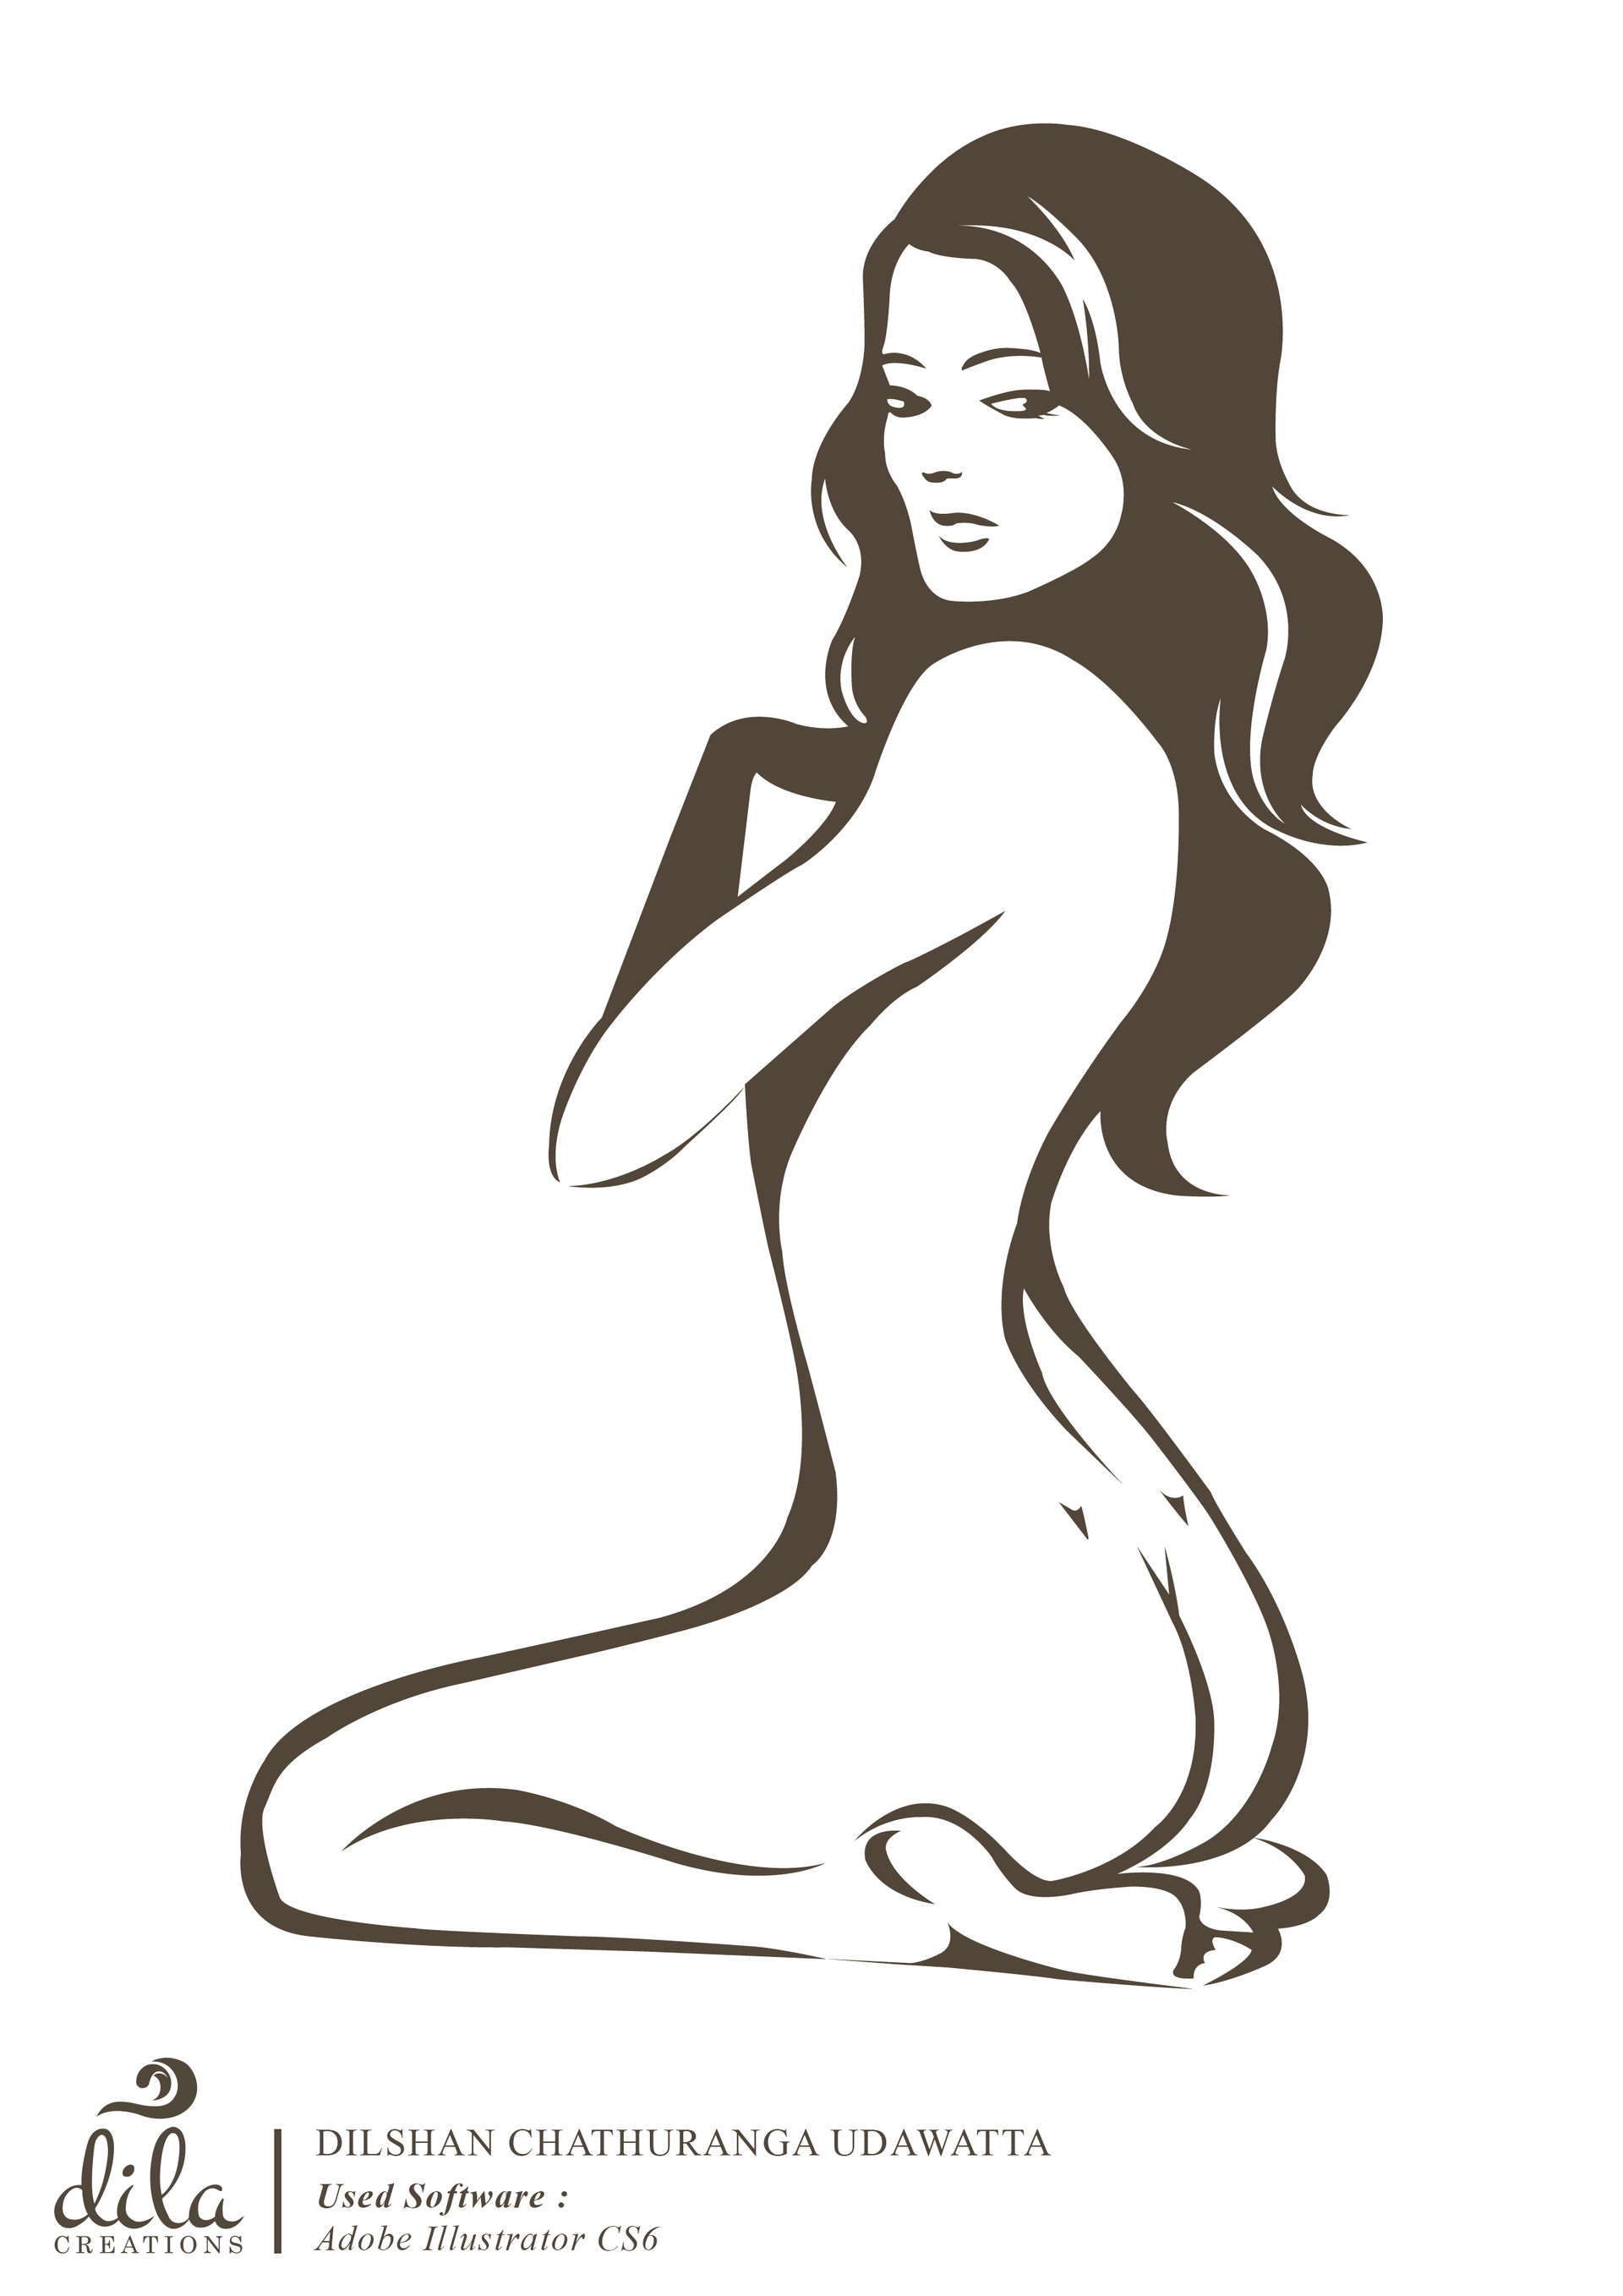 fkk young nudist girl naked password sex gallerie